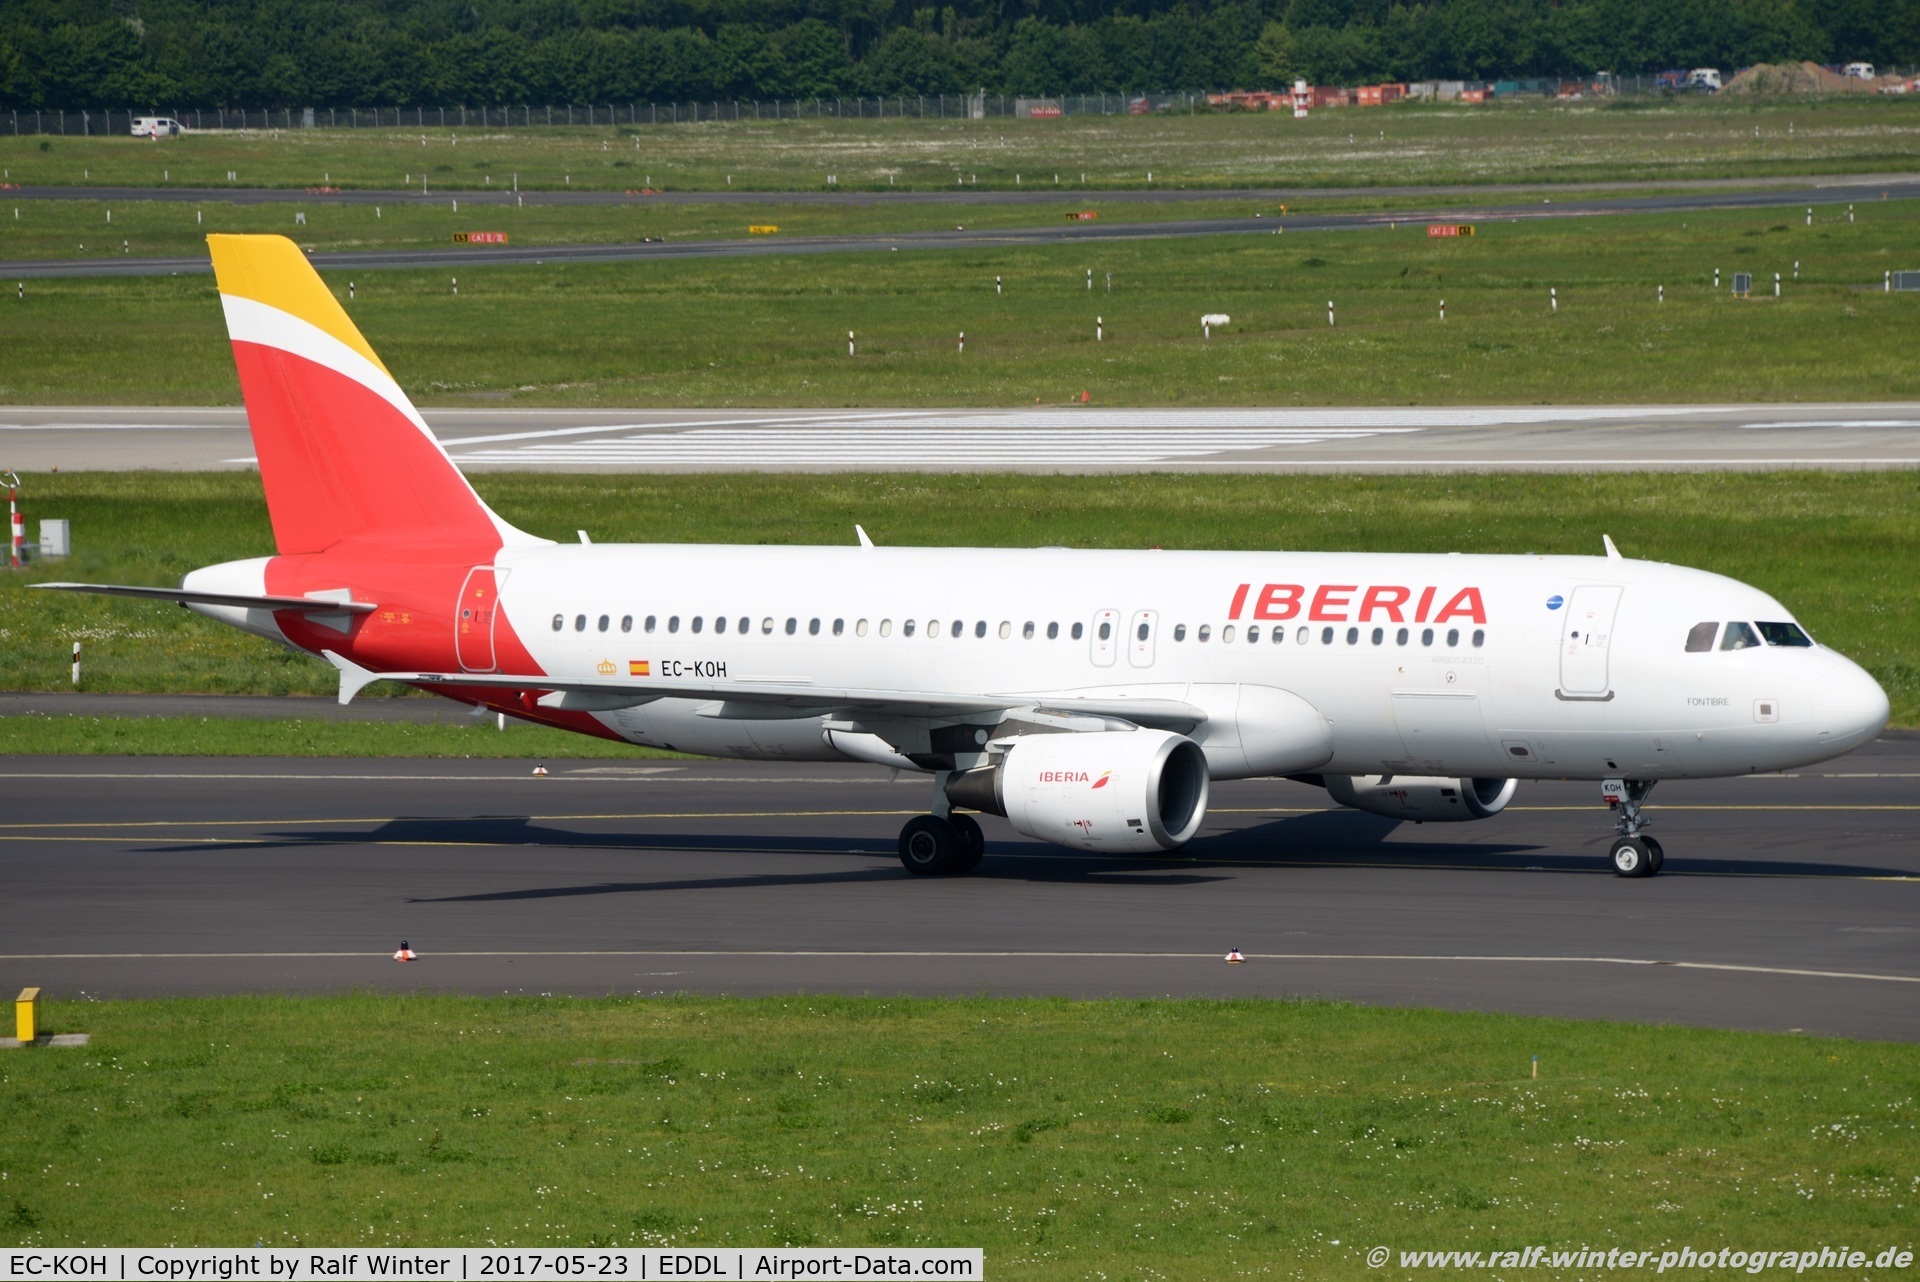 EC-KOH, 2004 Airbus A320-214 C/N 2248, Airbus A320-214 - IB IBE Iberia 'Fontibre' - 2248 - EC-KOH - 23.05.2017 - DUS